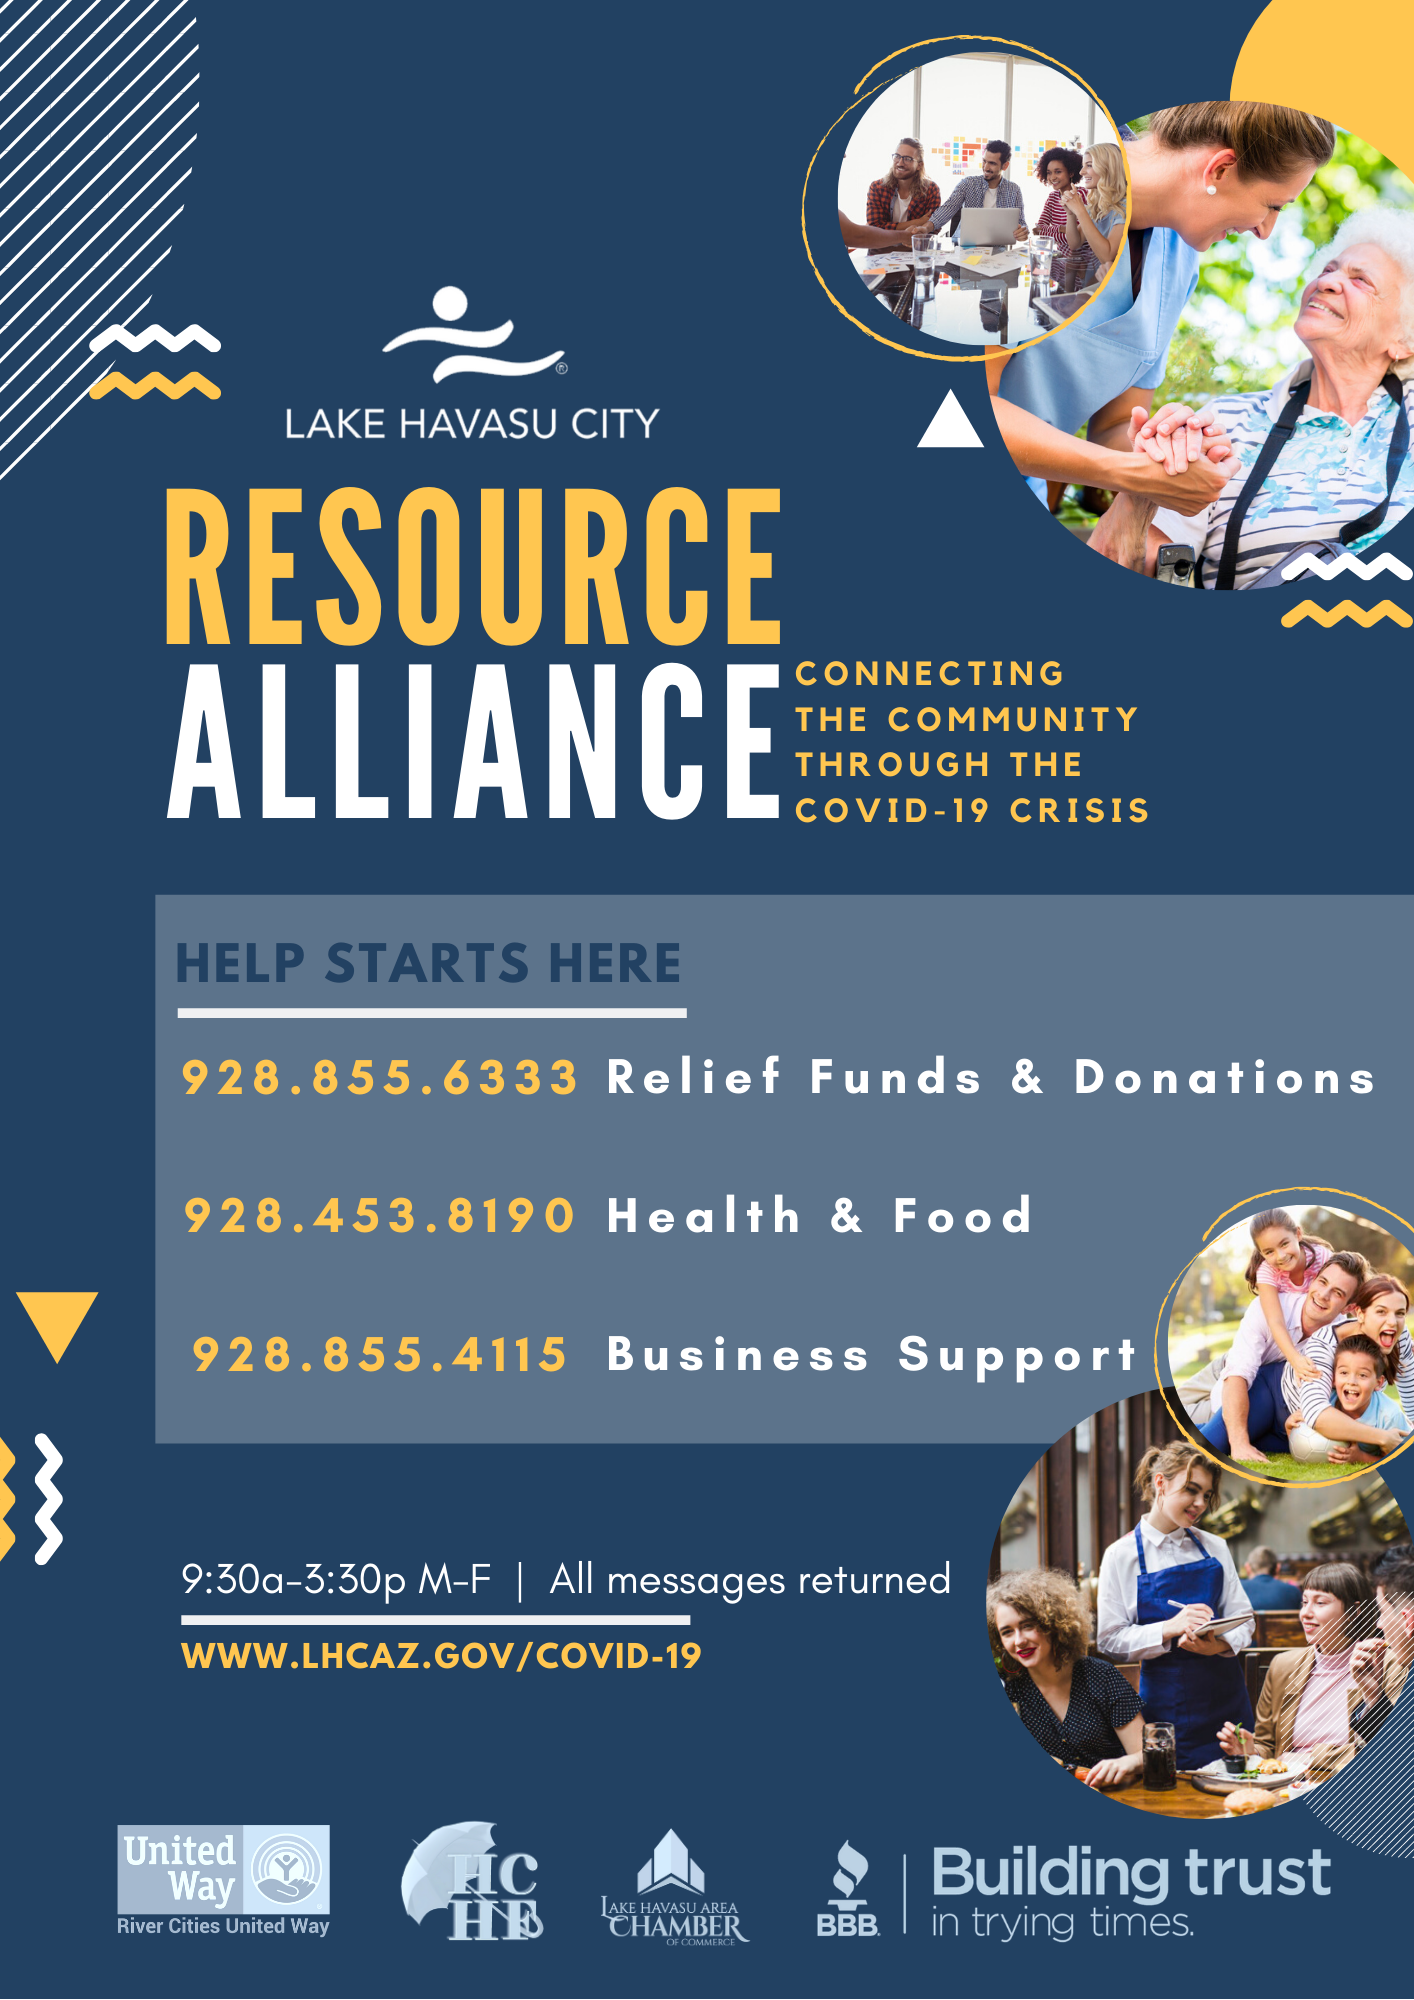 Resource Alliance for Lake Havasu City